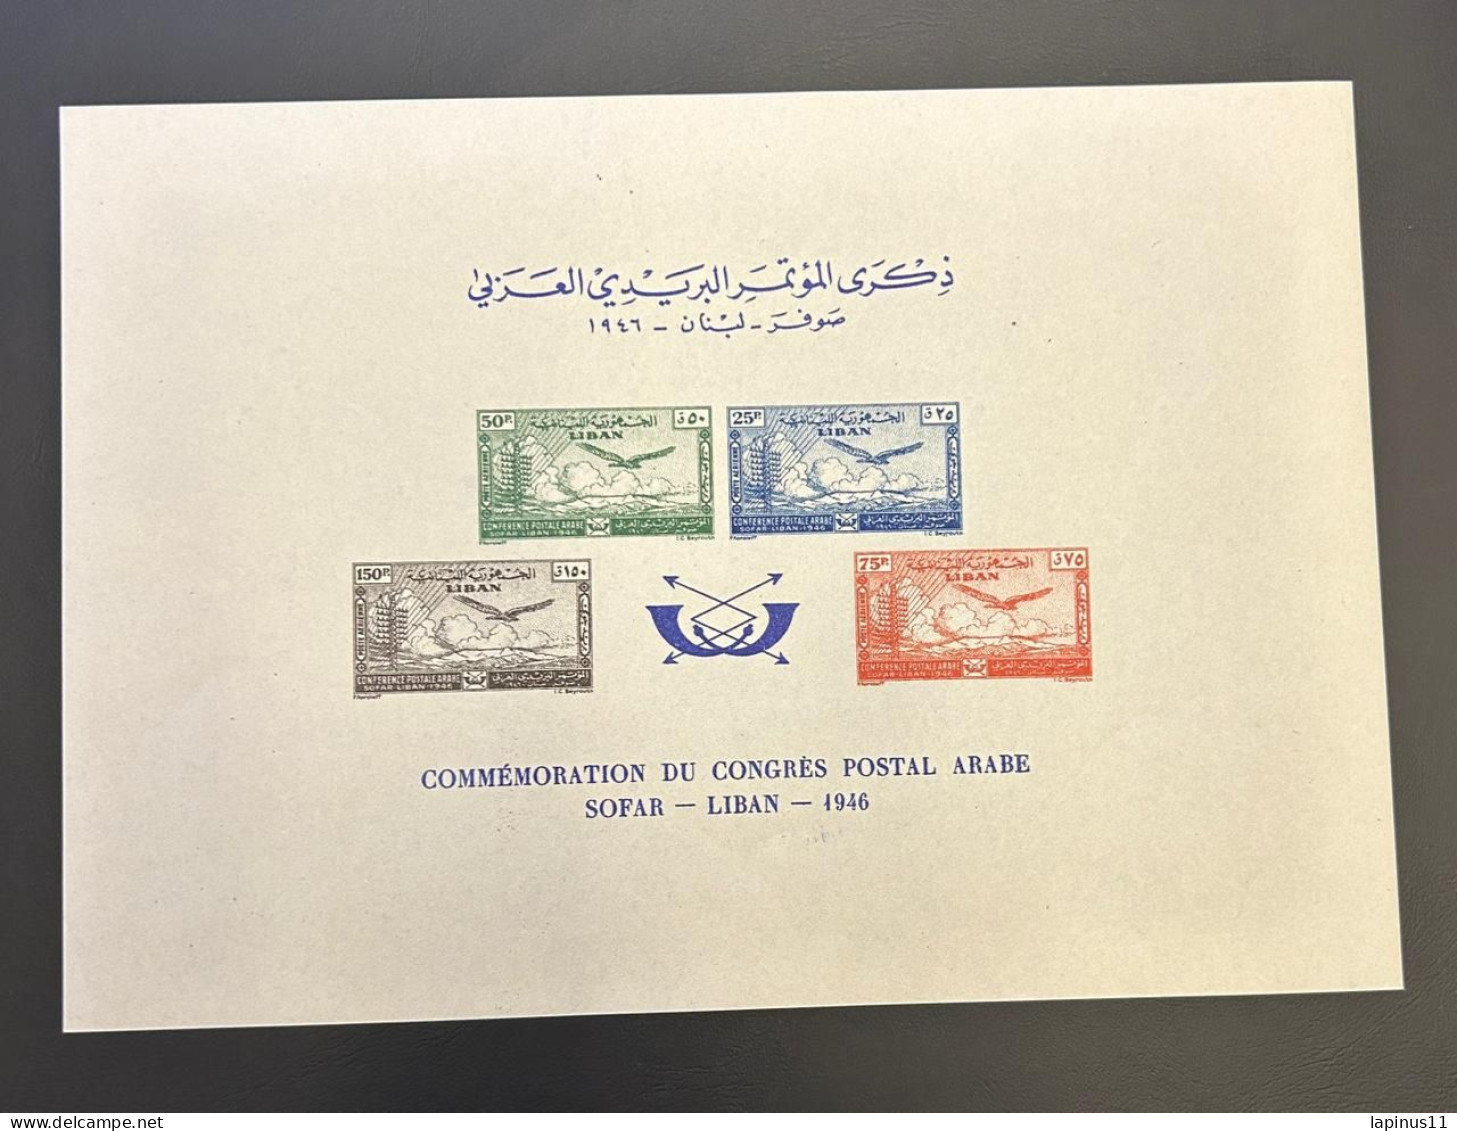 Liban Lebanon RARE Bloc SAWFAR 1946 Congres Postale Arabe MNH - Lebanon